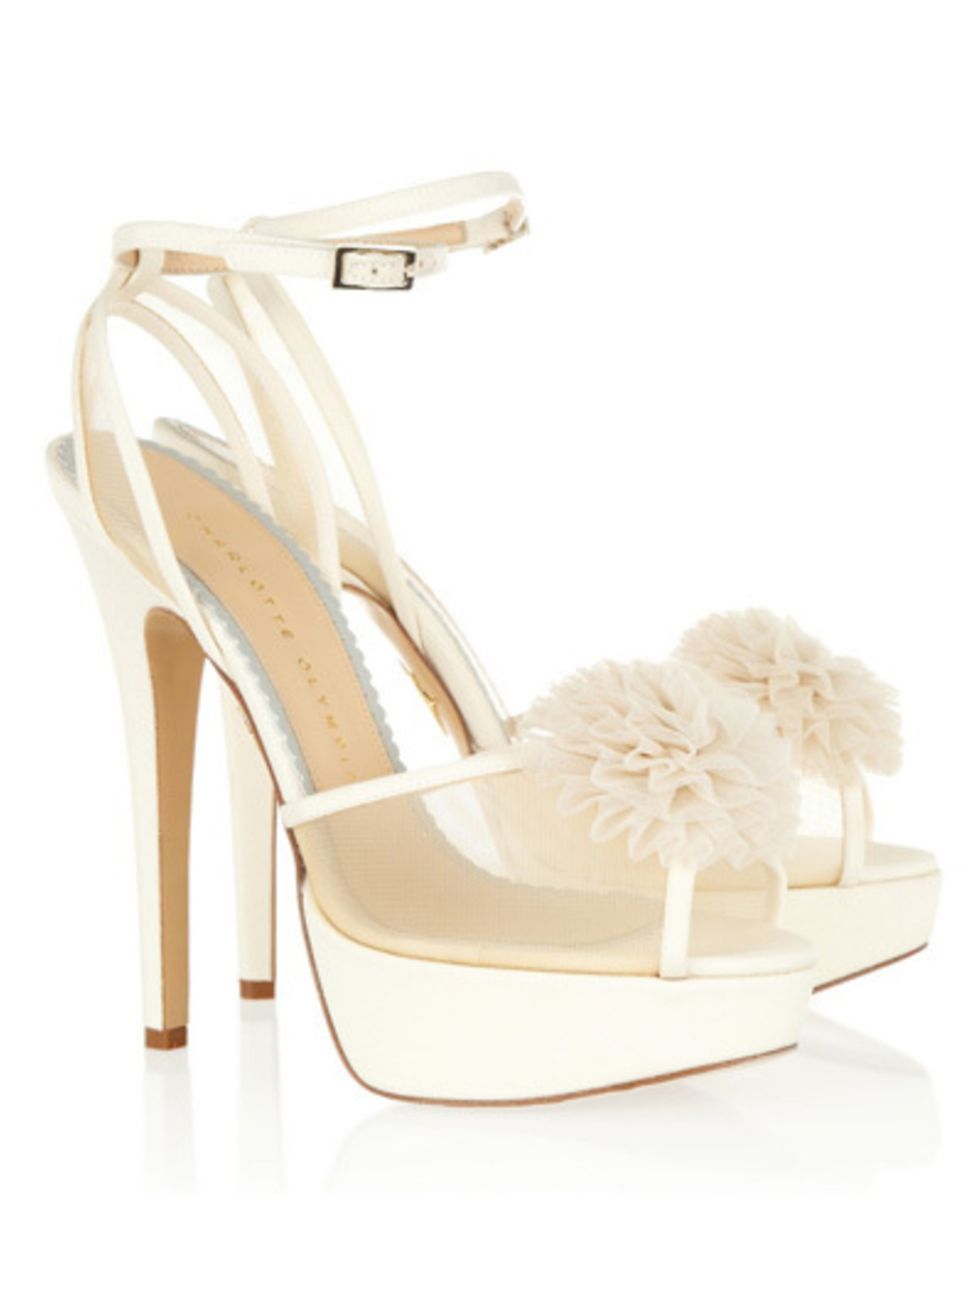 Footwear, High heels, White, Sandal, Fashion accessory, Tan, Basic pump, Beige, Natural material, Bridal shoe, 